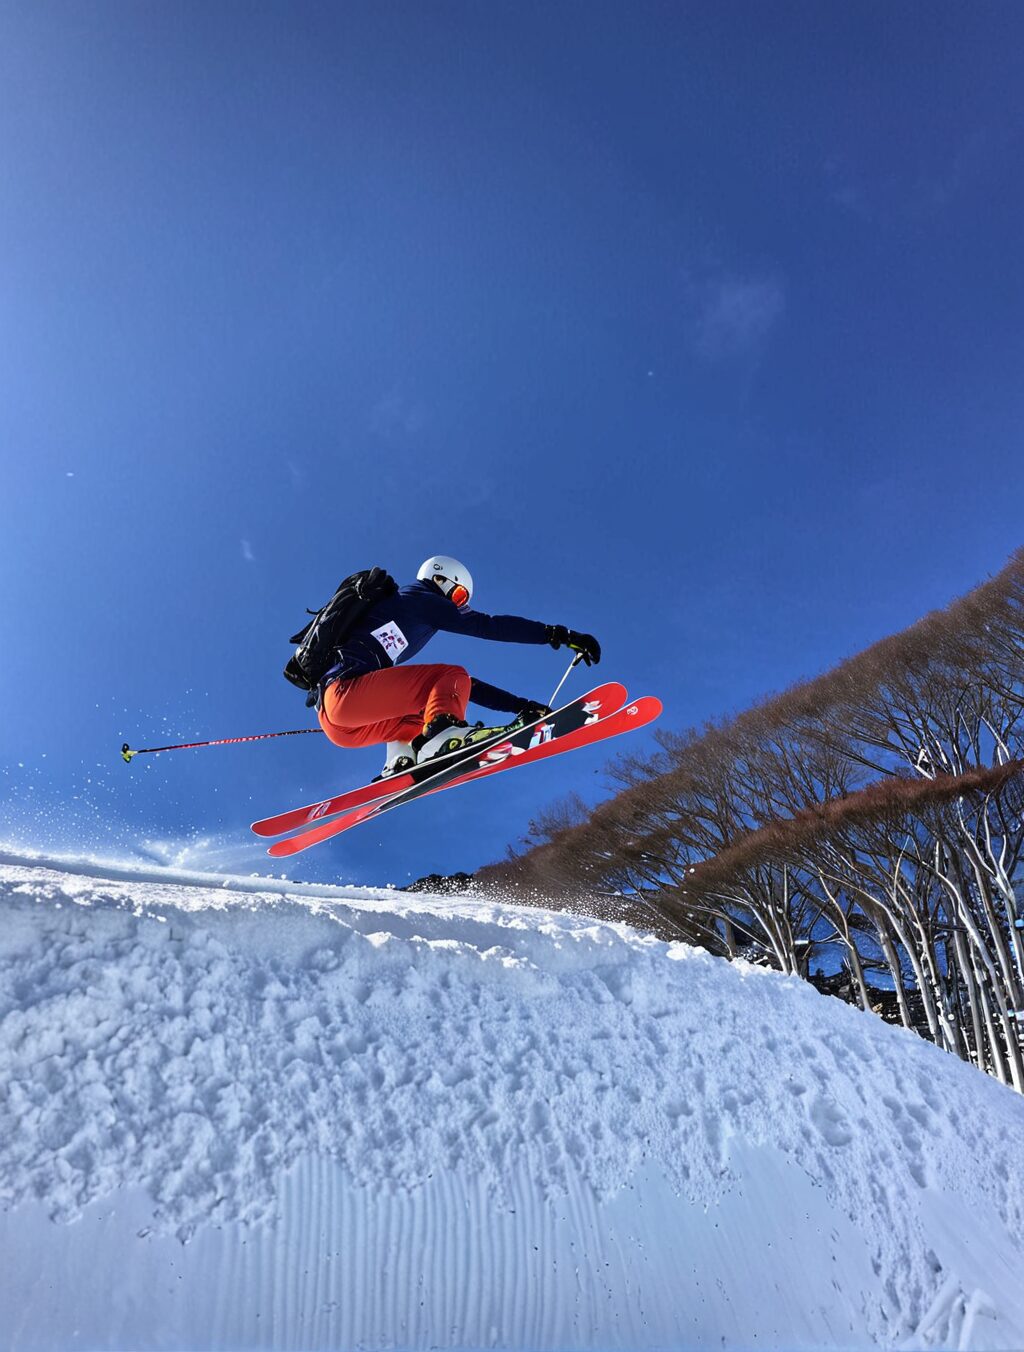 when does ski season in japan start